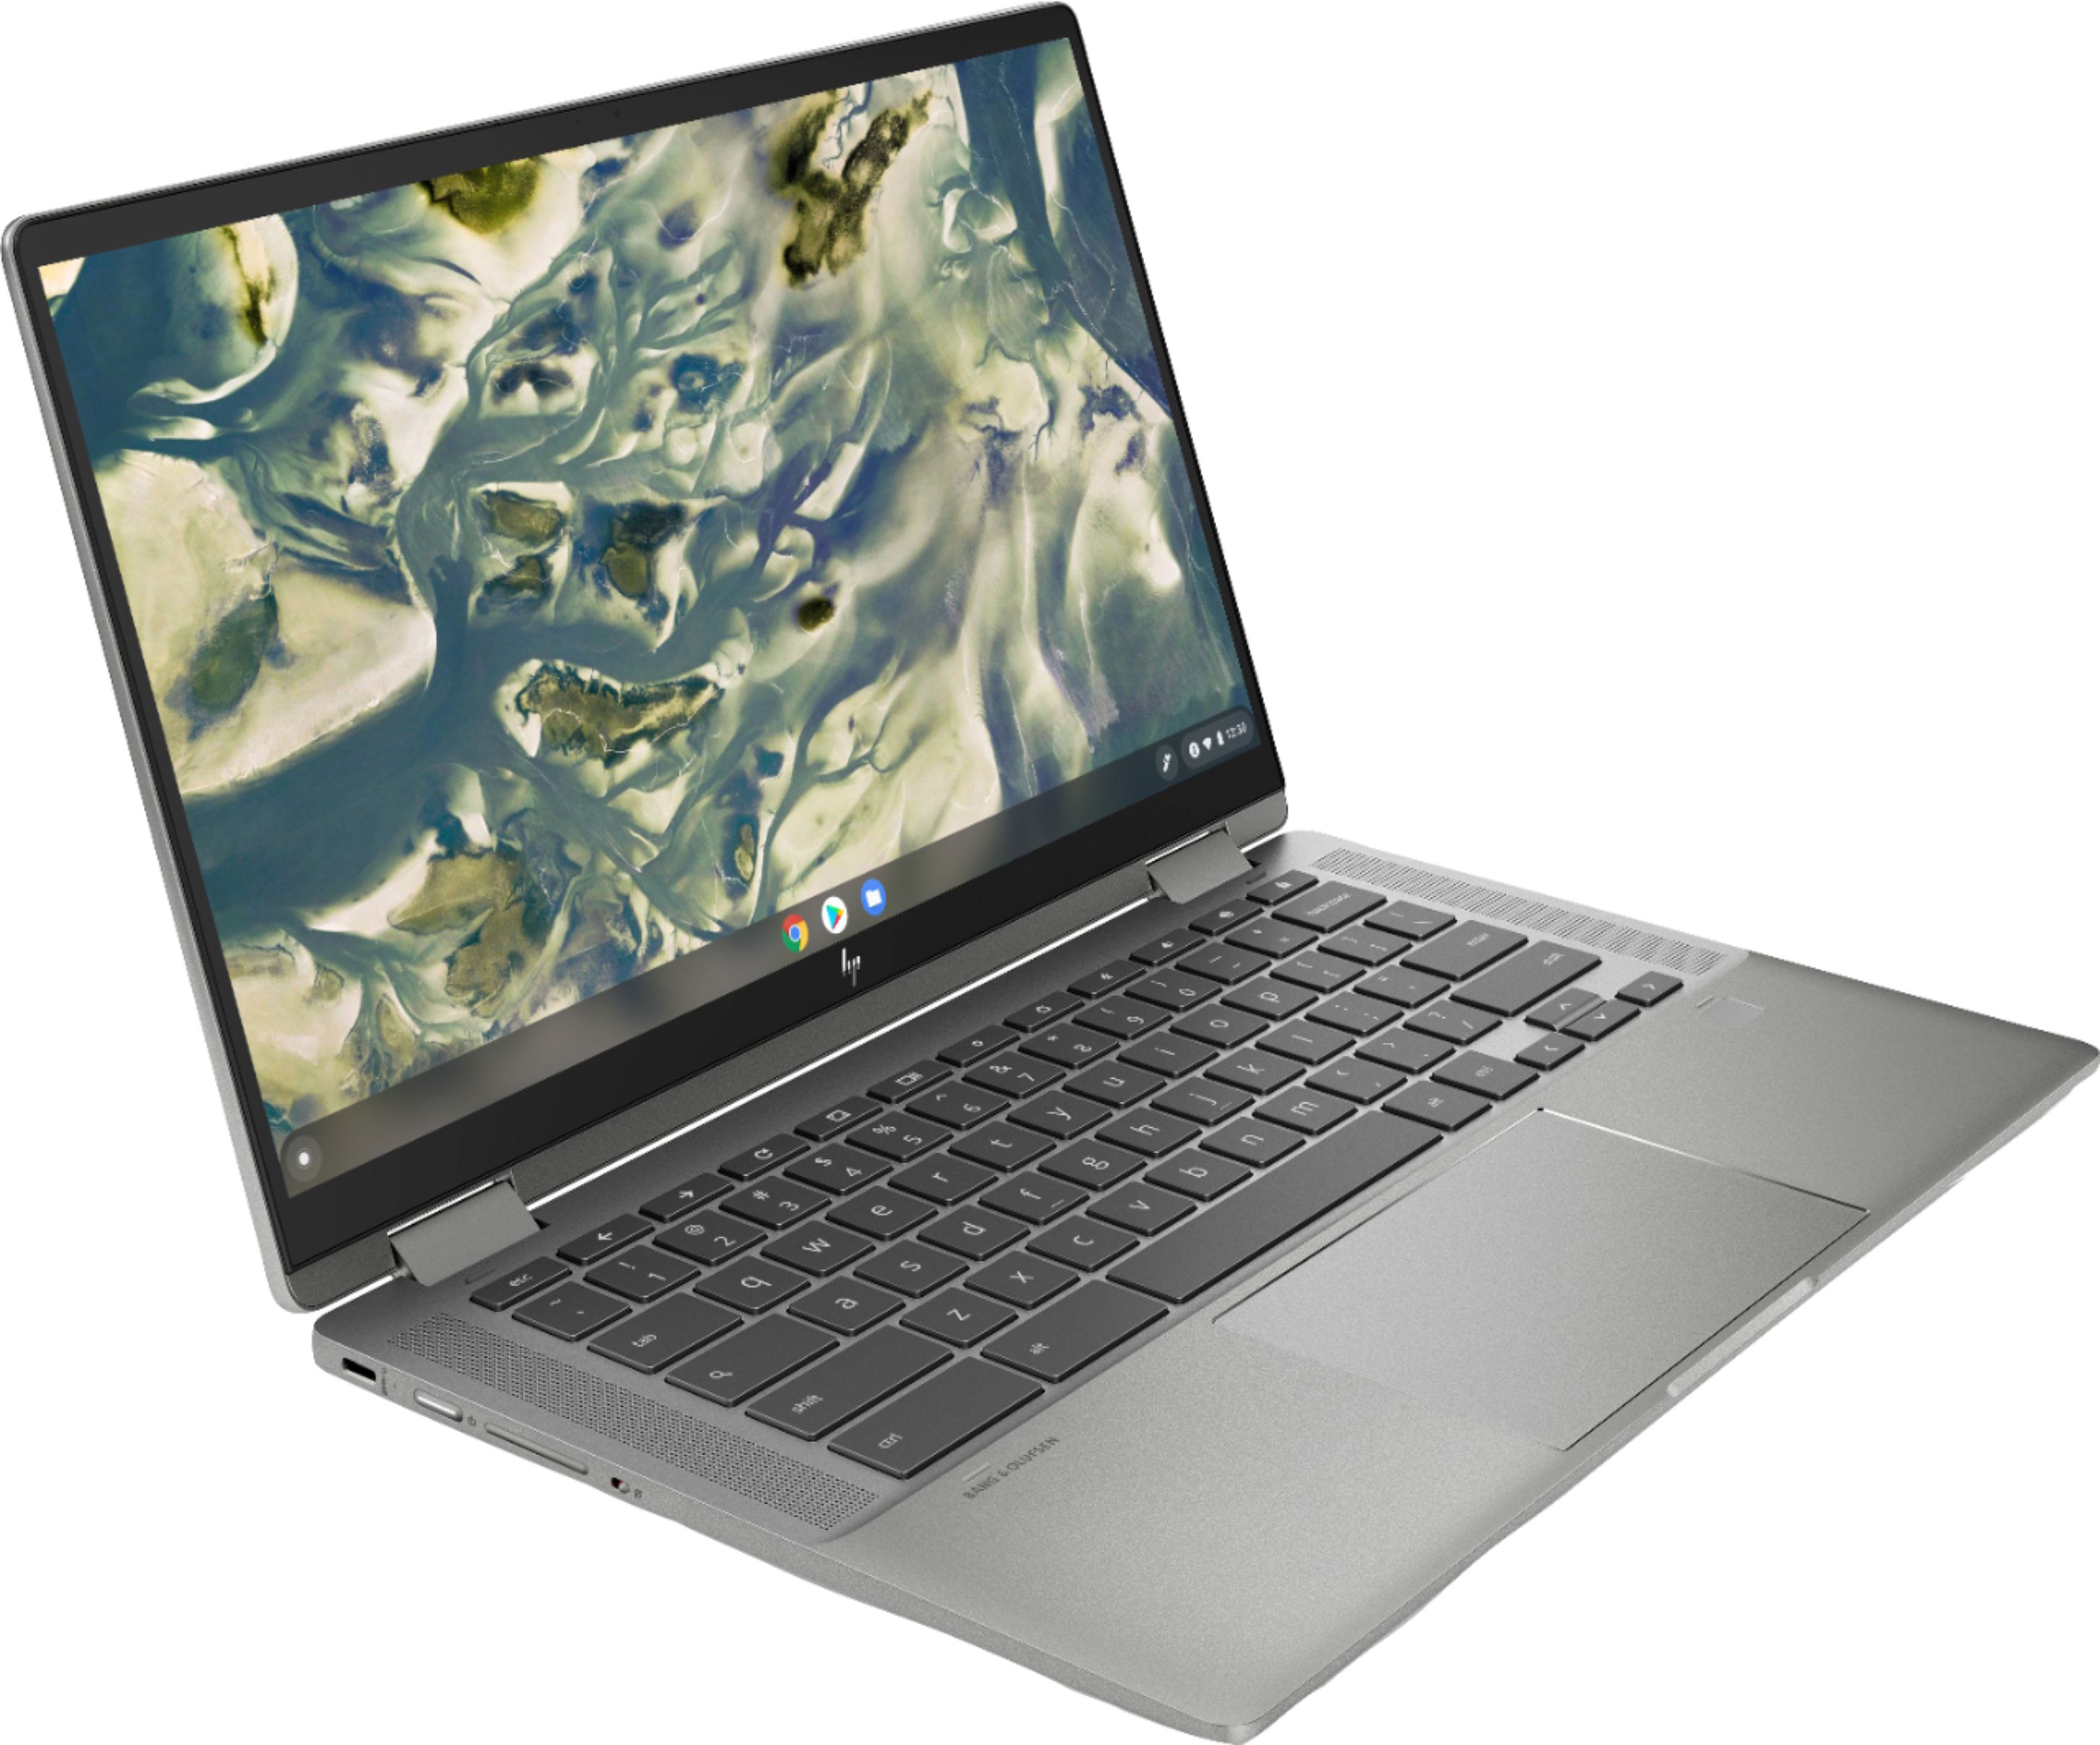 HP Chromebook x360 14c gets 2021 refresh w/ better specs 9to5Google